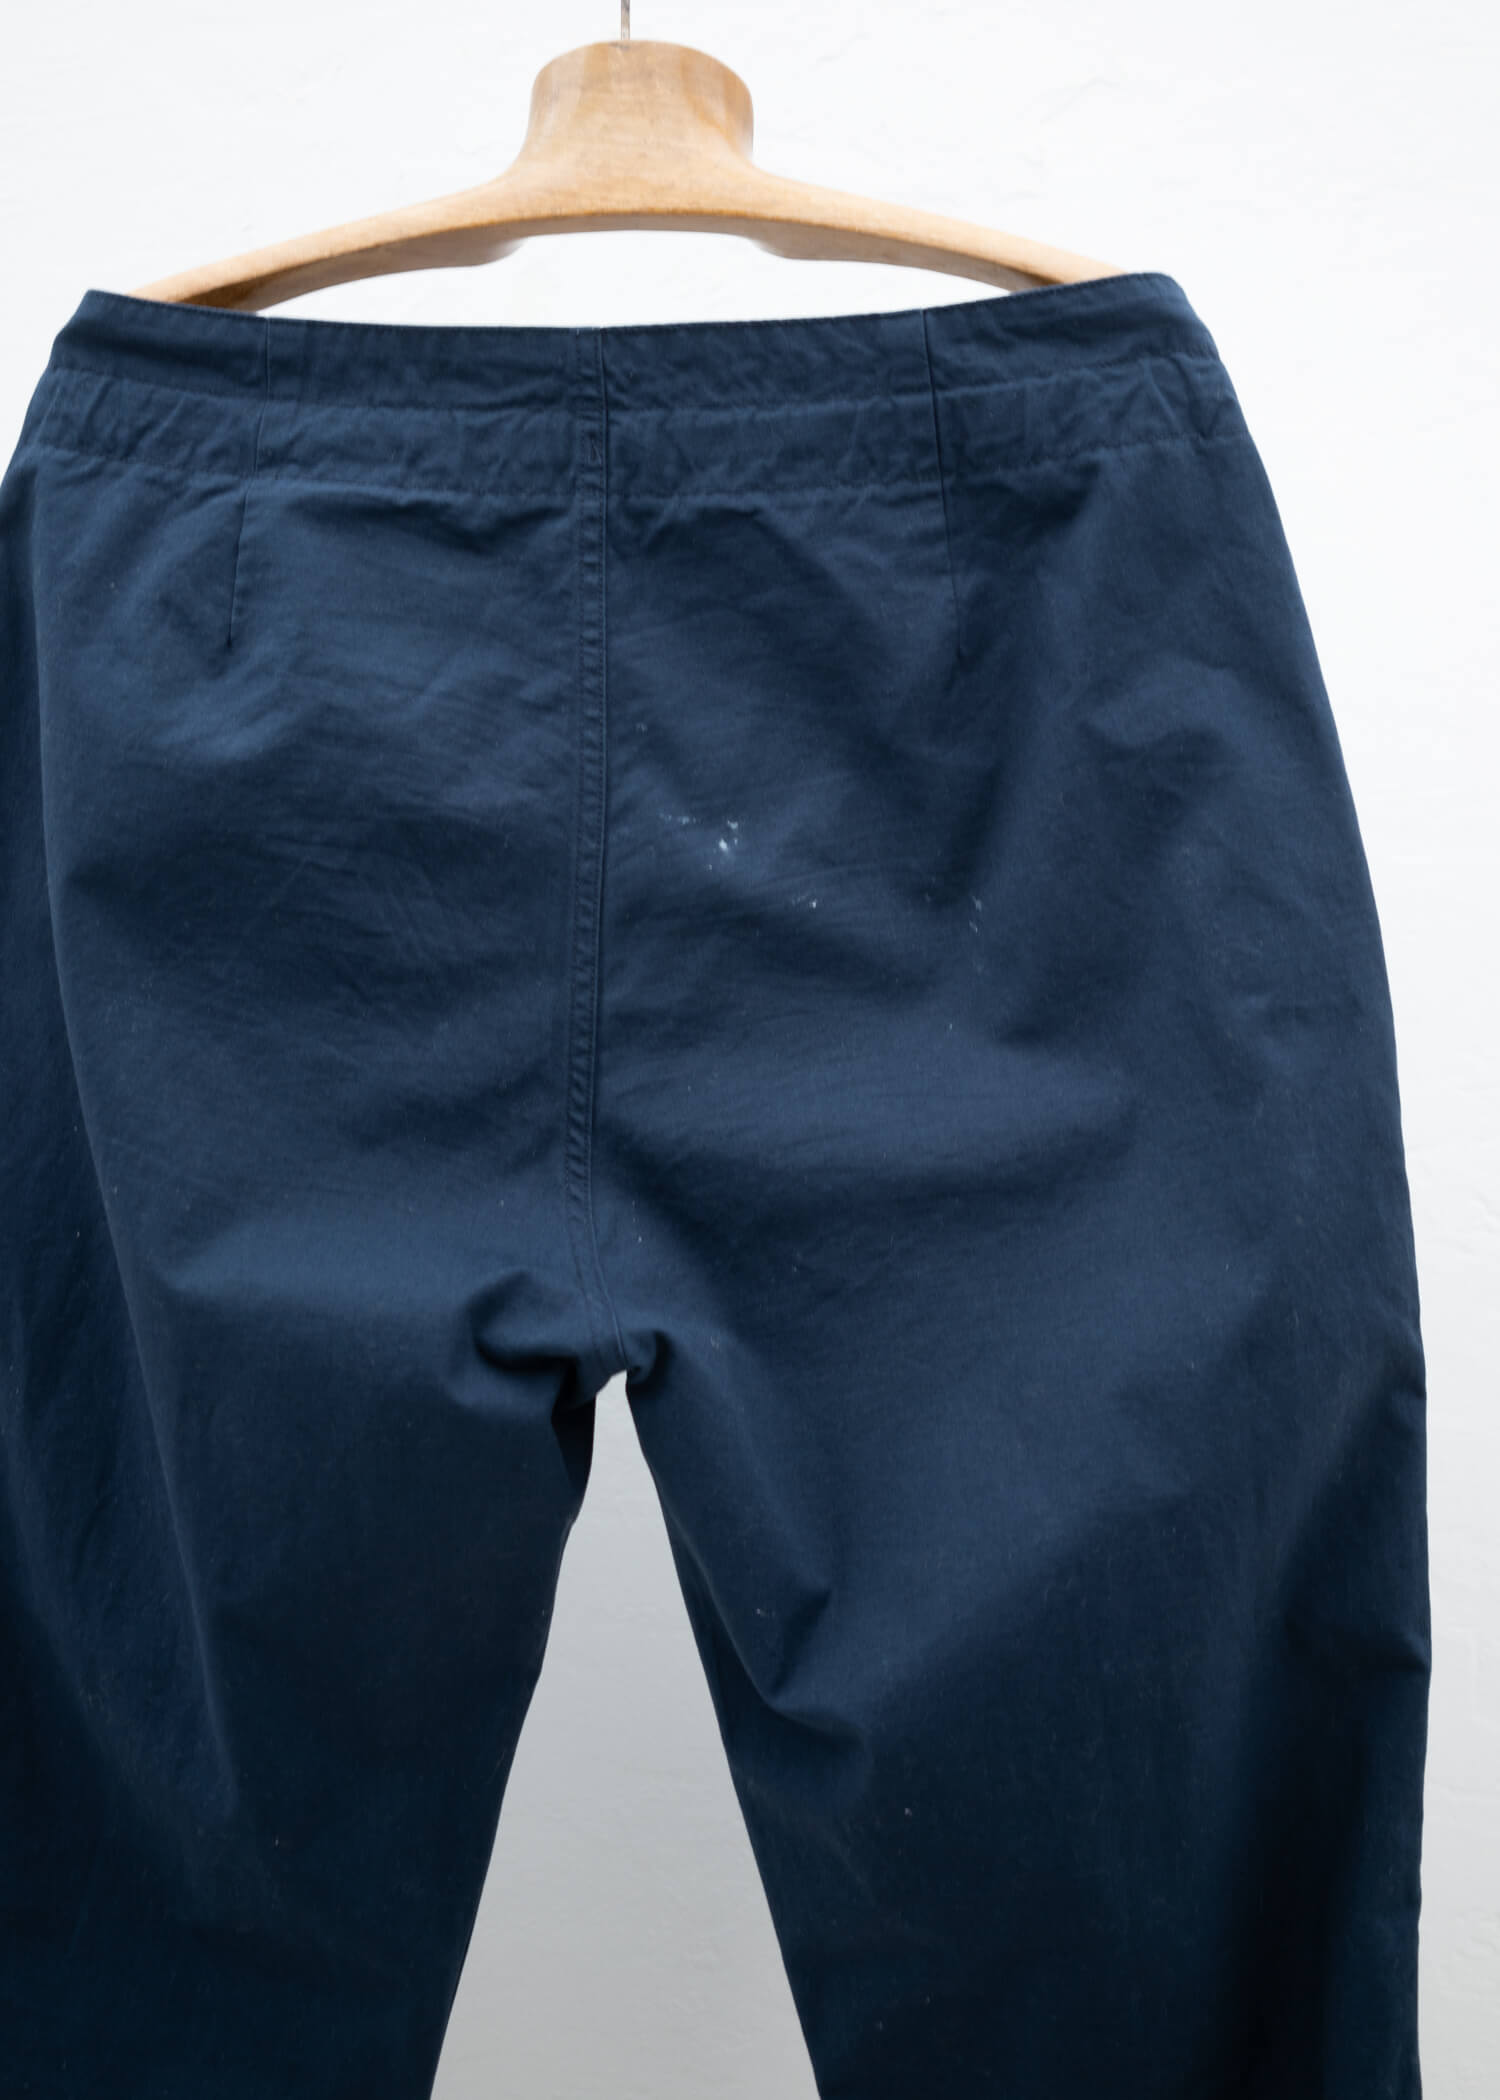 Nigel Cabourn Cotton Cargo Pants